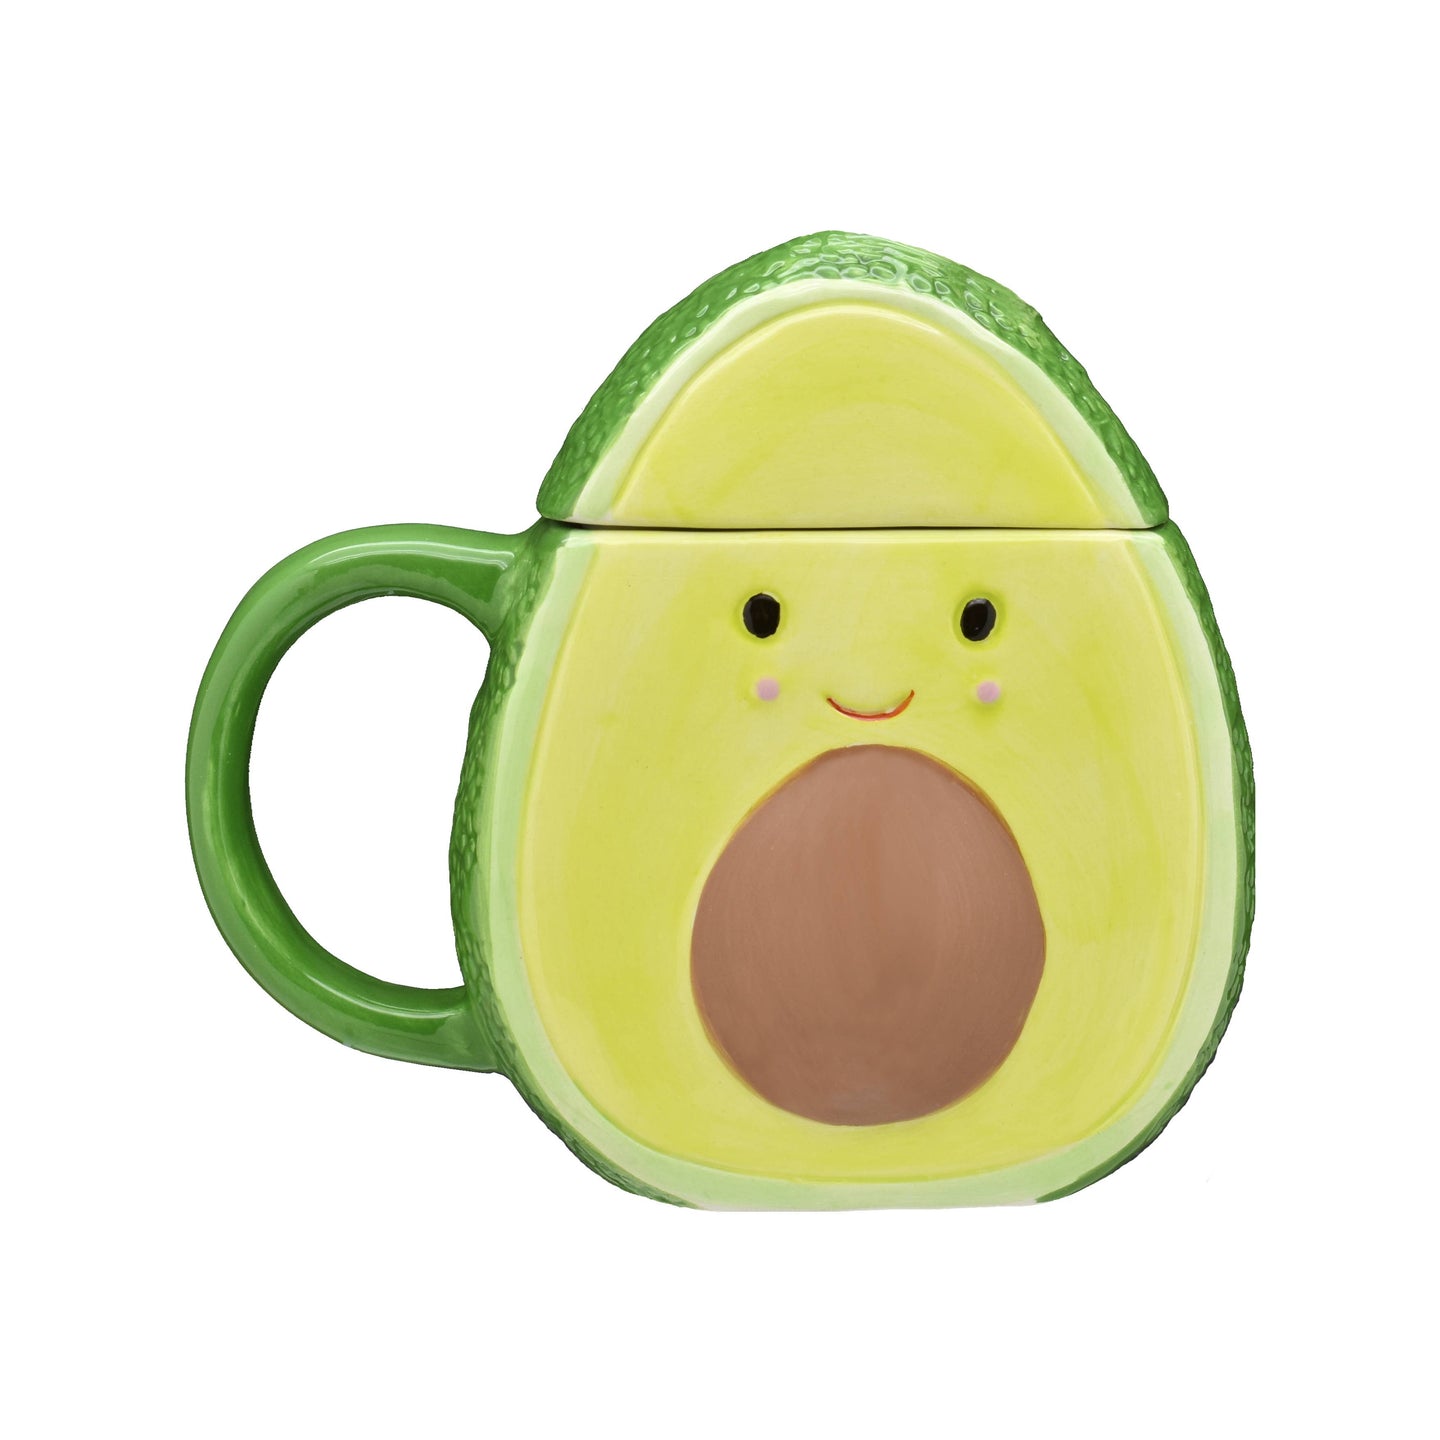 Avocado-Shaped Mug with Lid